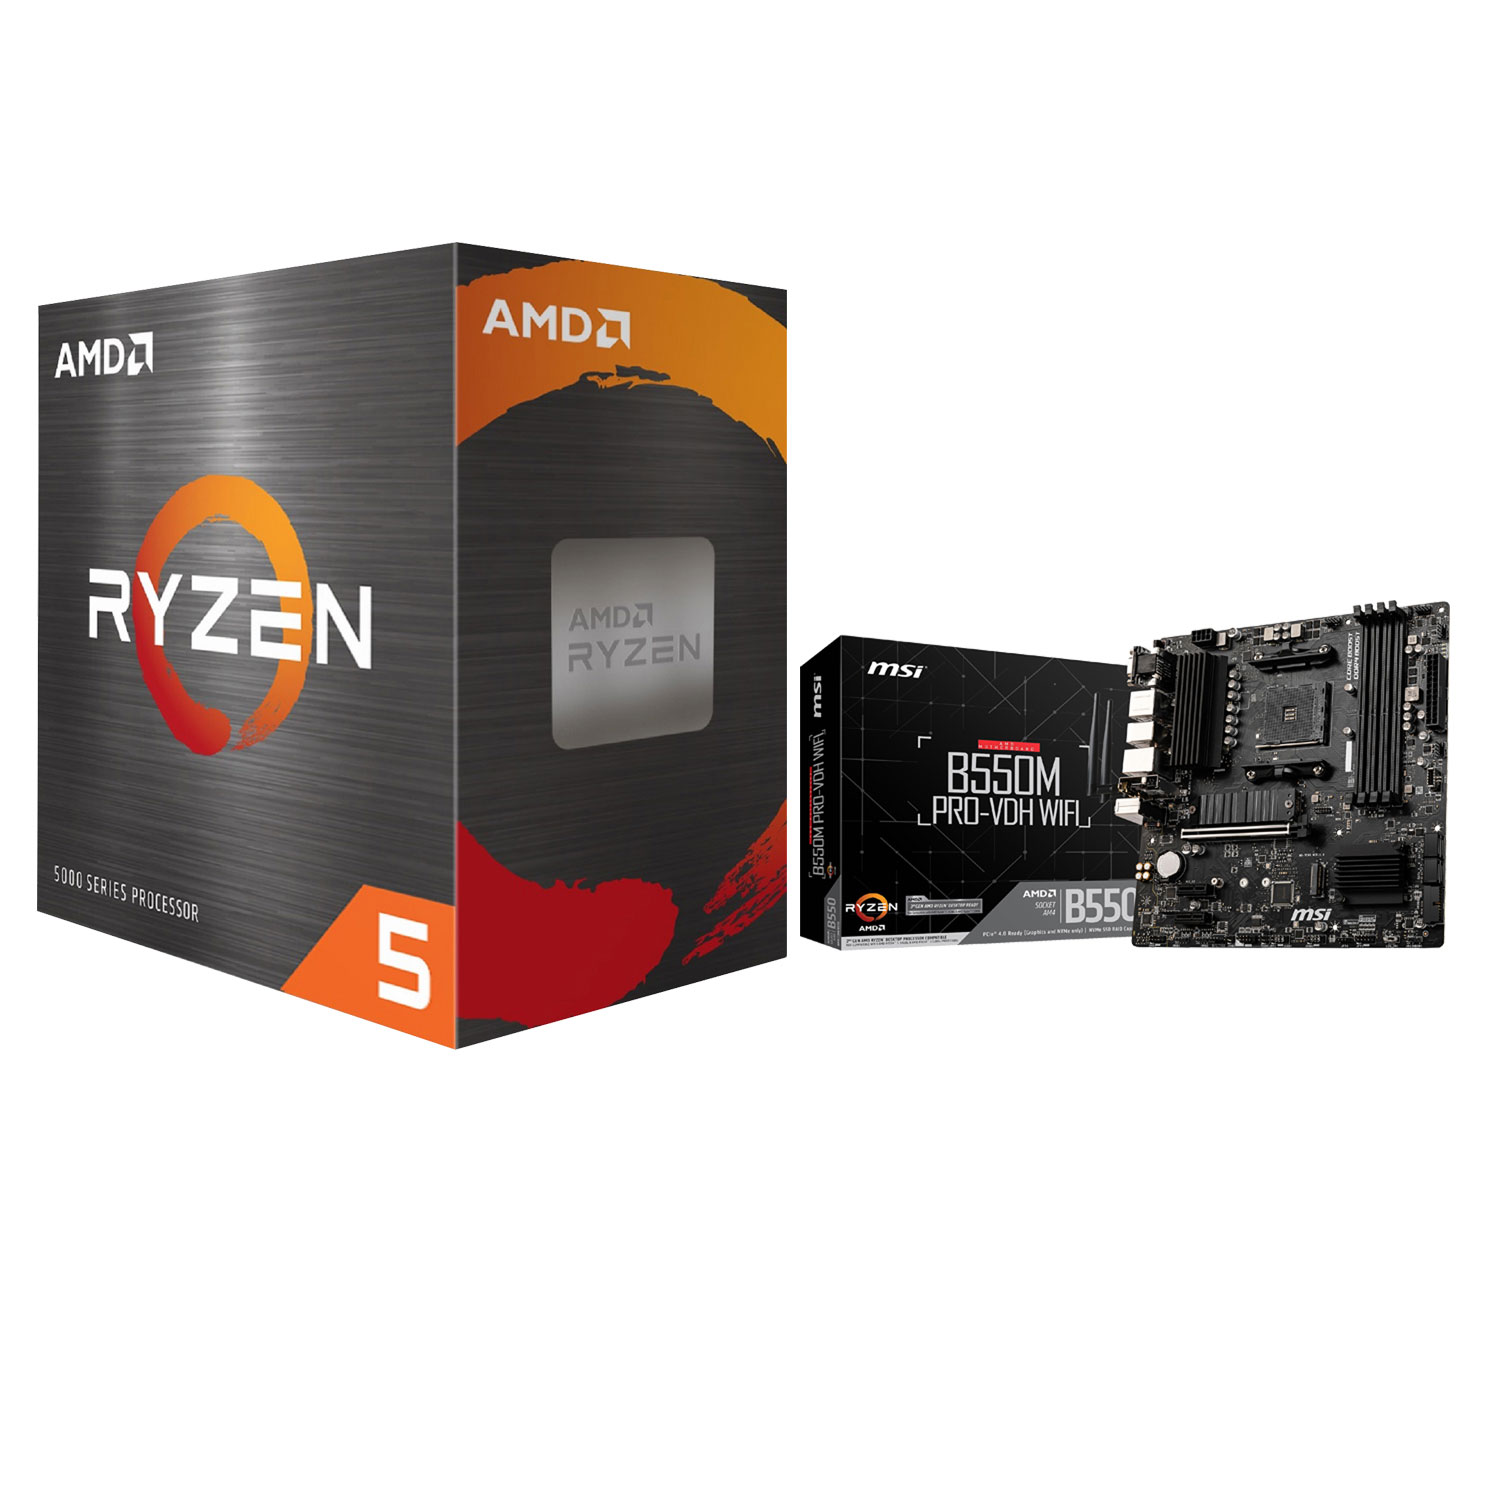 AMD Ryzen 5 5600X Hexa-Core 3.7GHz AM4 Desktop Processor & WIFI Micro-ATX LGA AM4 DD4 Motherboard